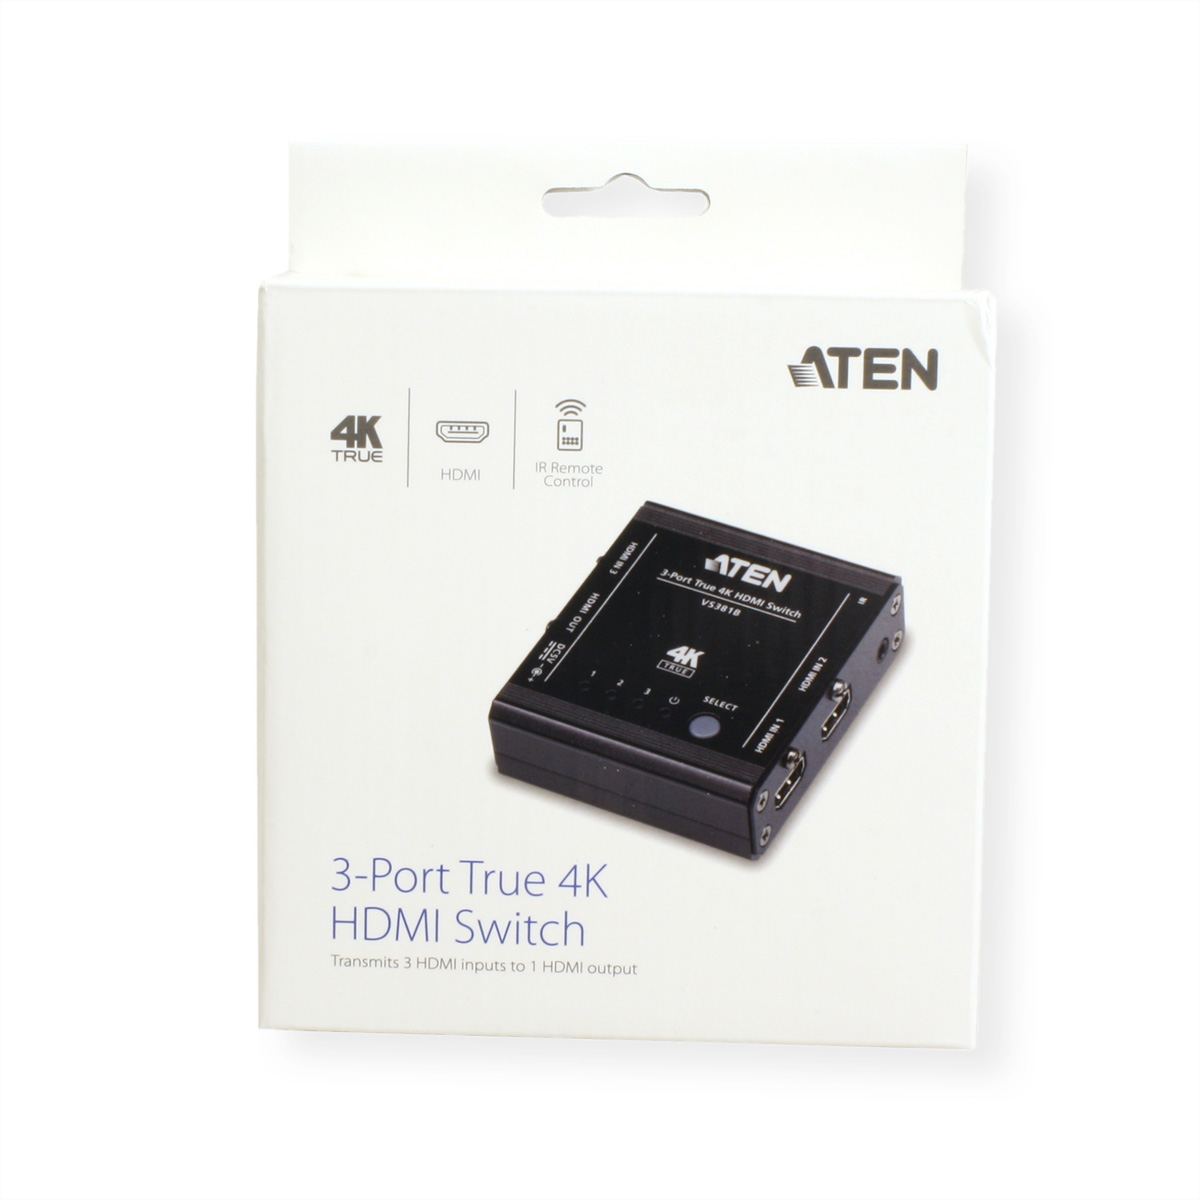 3 4K Ports HDMI VS381B HDMI-Video-Switch Switch ATEN True mit